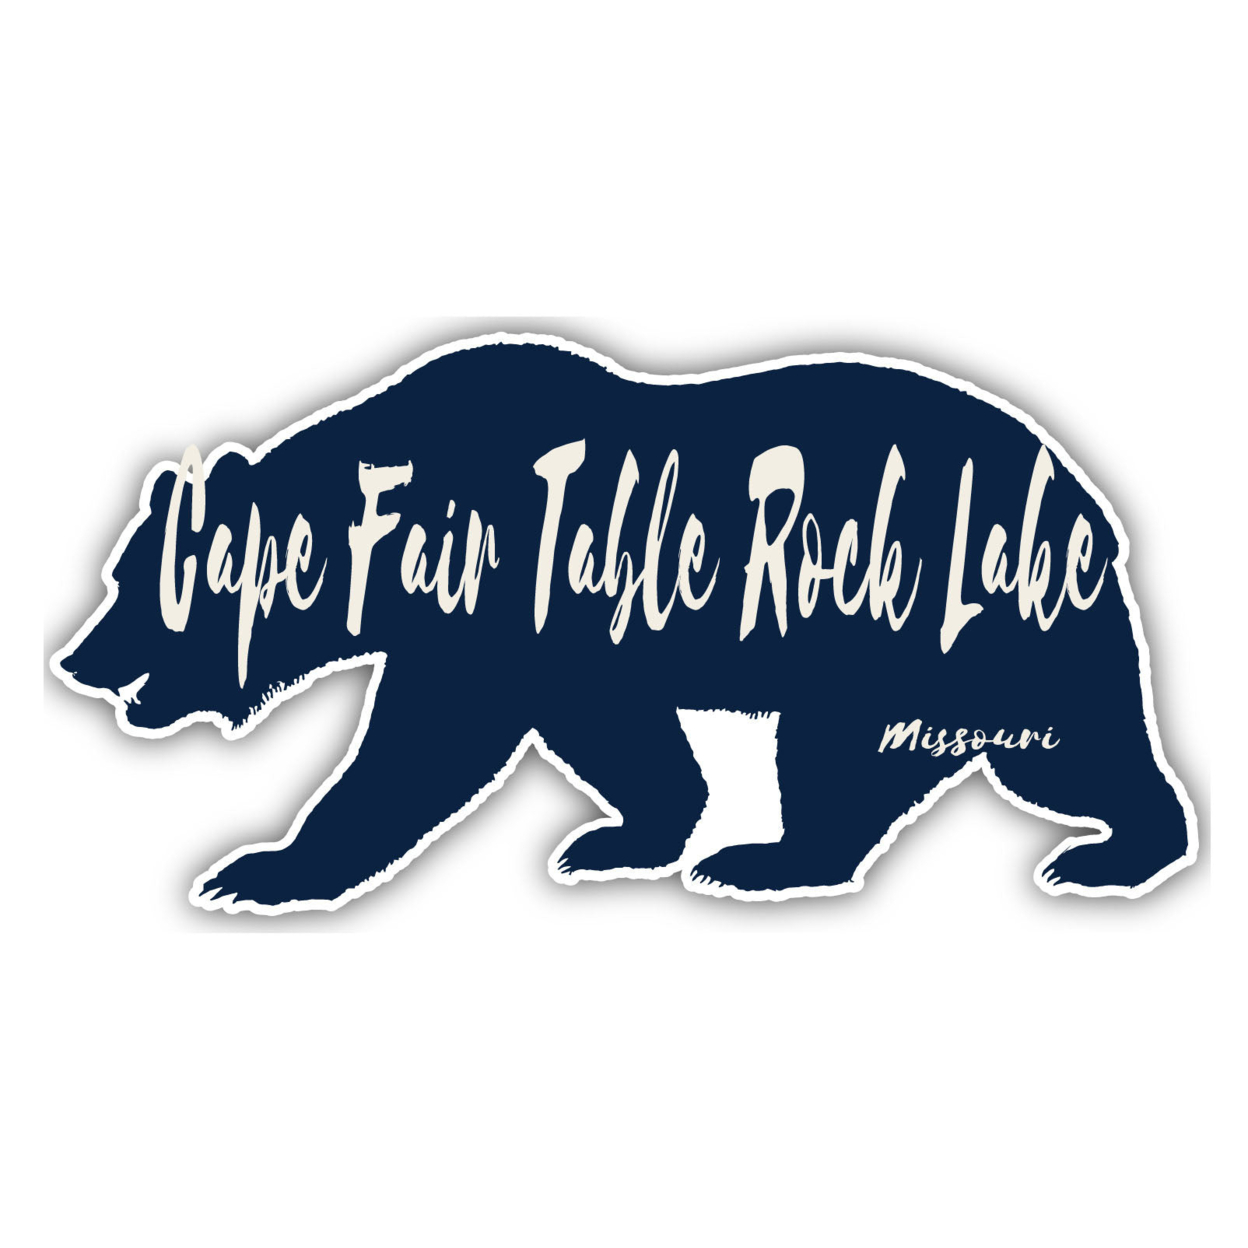 Cape Fair Table Rock Lake Missouri Souvenir Decorative Stickers (Choose Theme And Size) - 4-Pack, 12-Inch, Bear